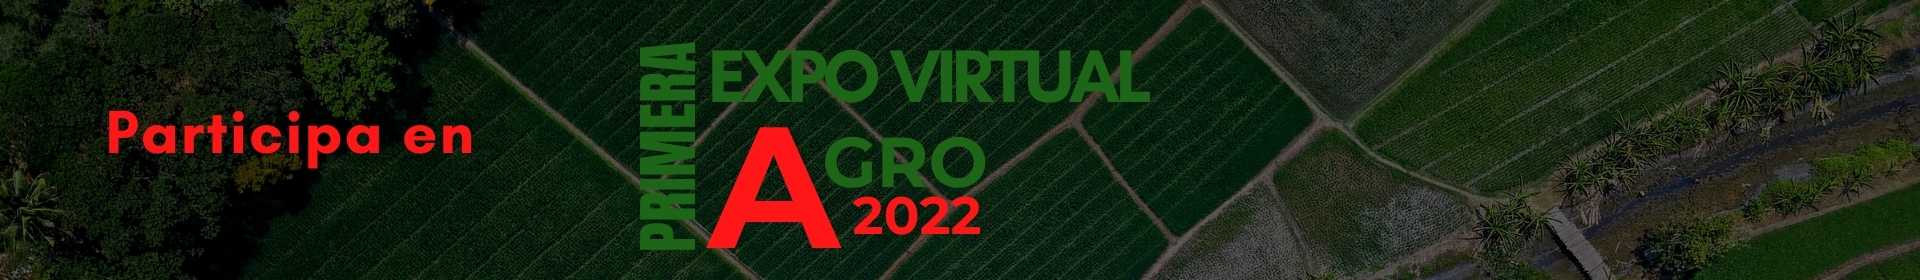 Expo Virtual Agro 2022 feria evento online participa